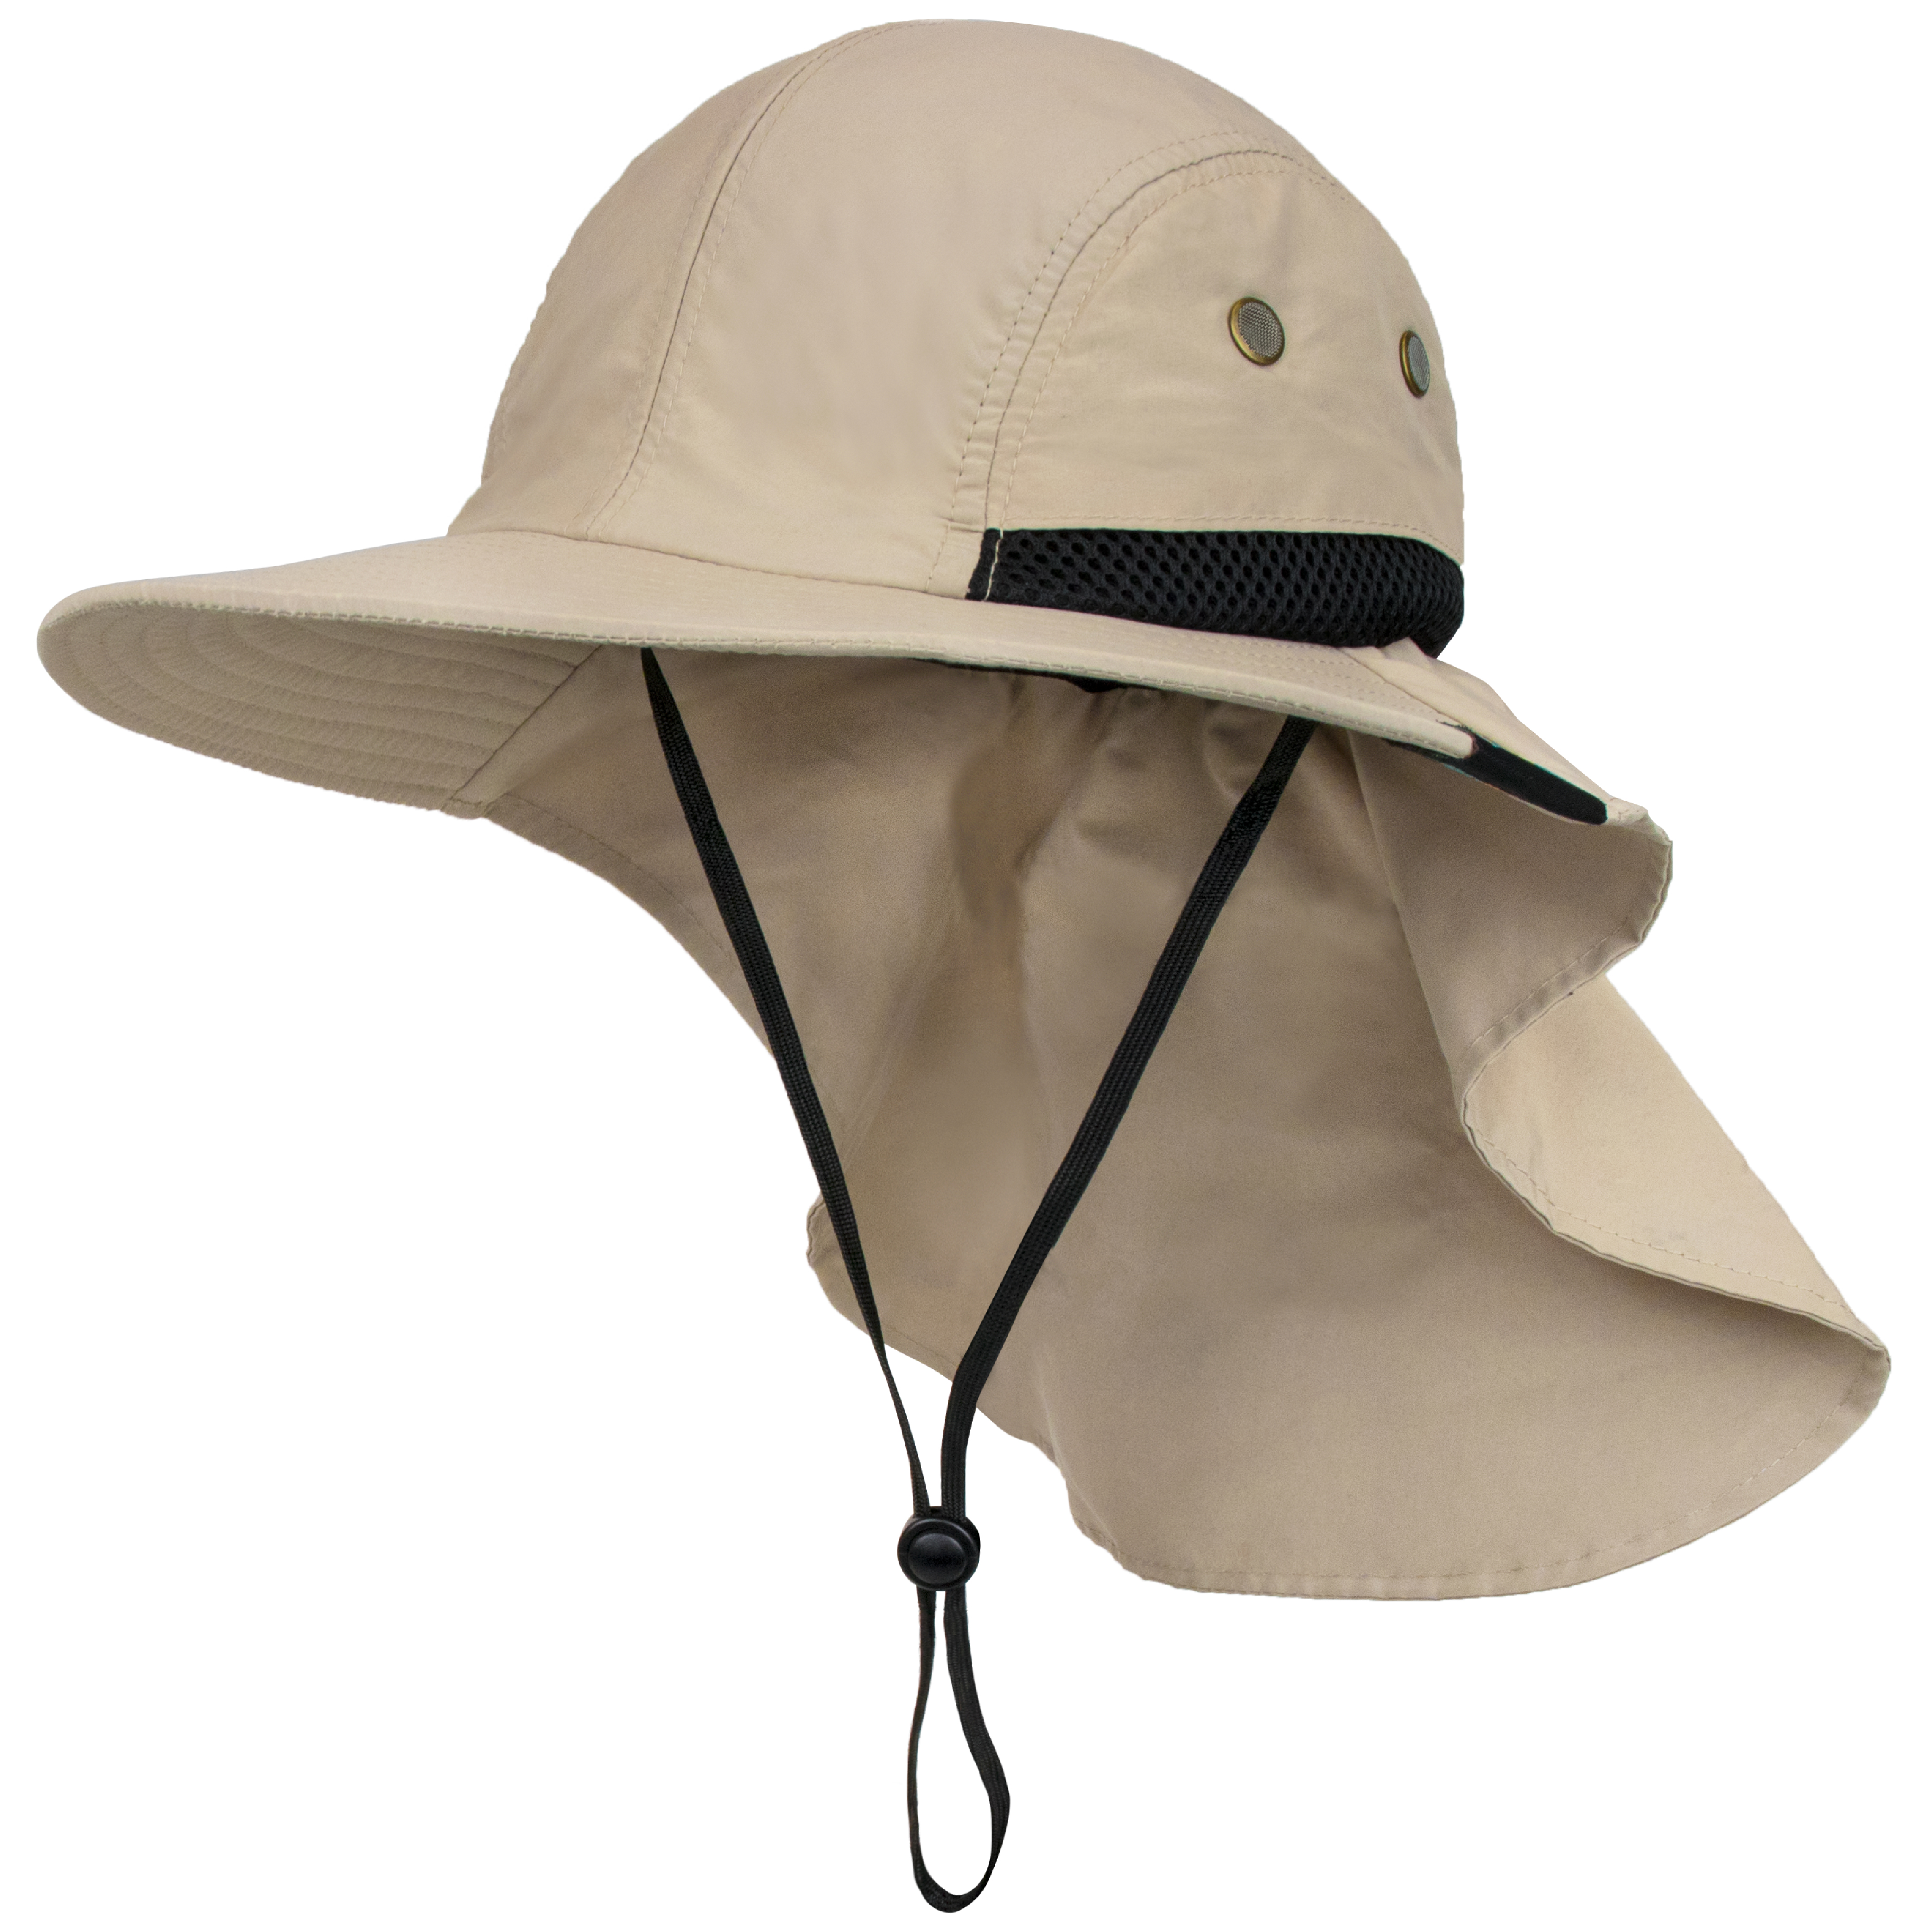 Unisex Safari Sun Flap Hat Fishing Hiking Cap w/Neck Cover Wide Brim Olive 